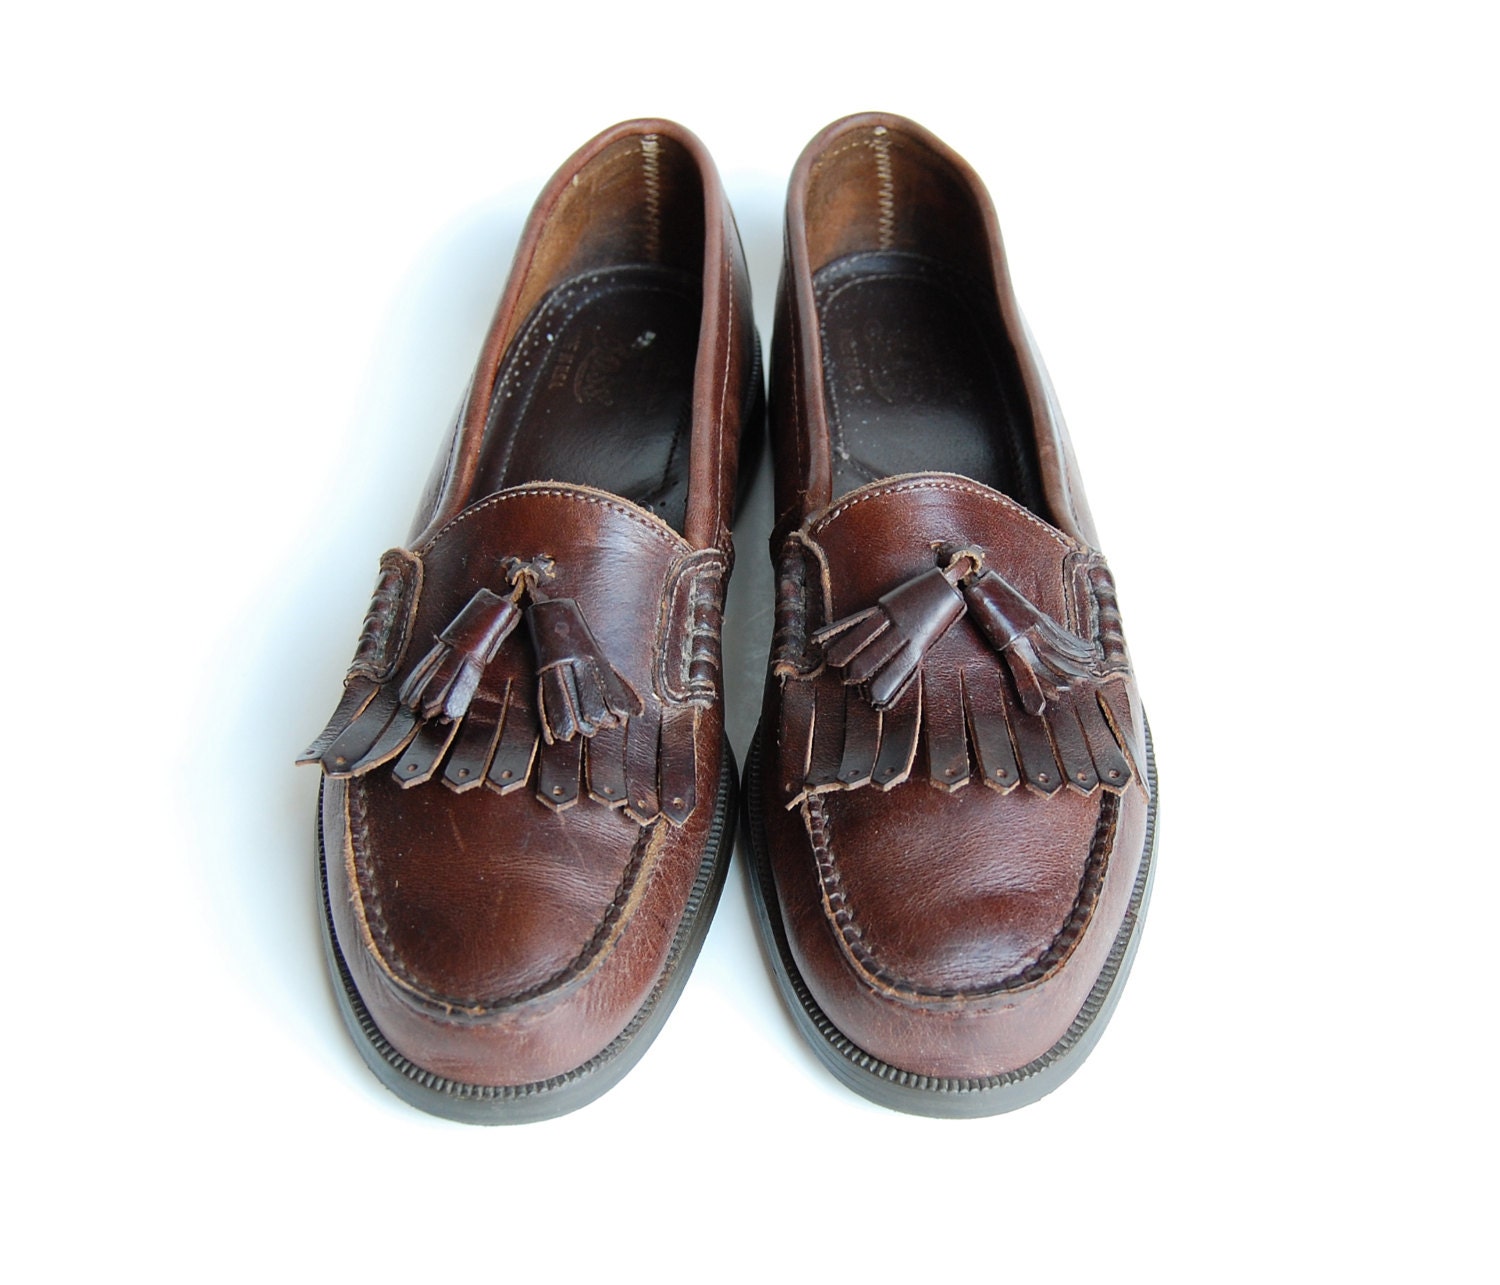 Vintage 80s Mens Leather Tassel Loafers / perforated fringe | Etsy